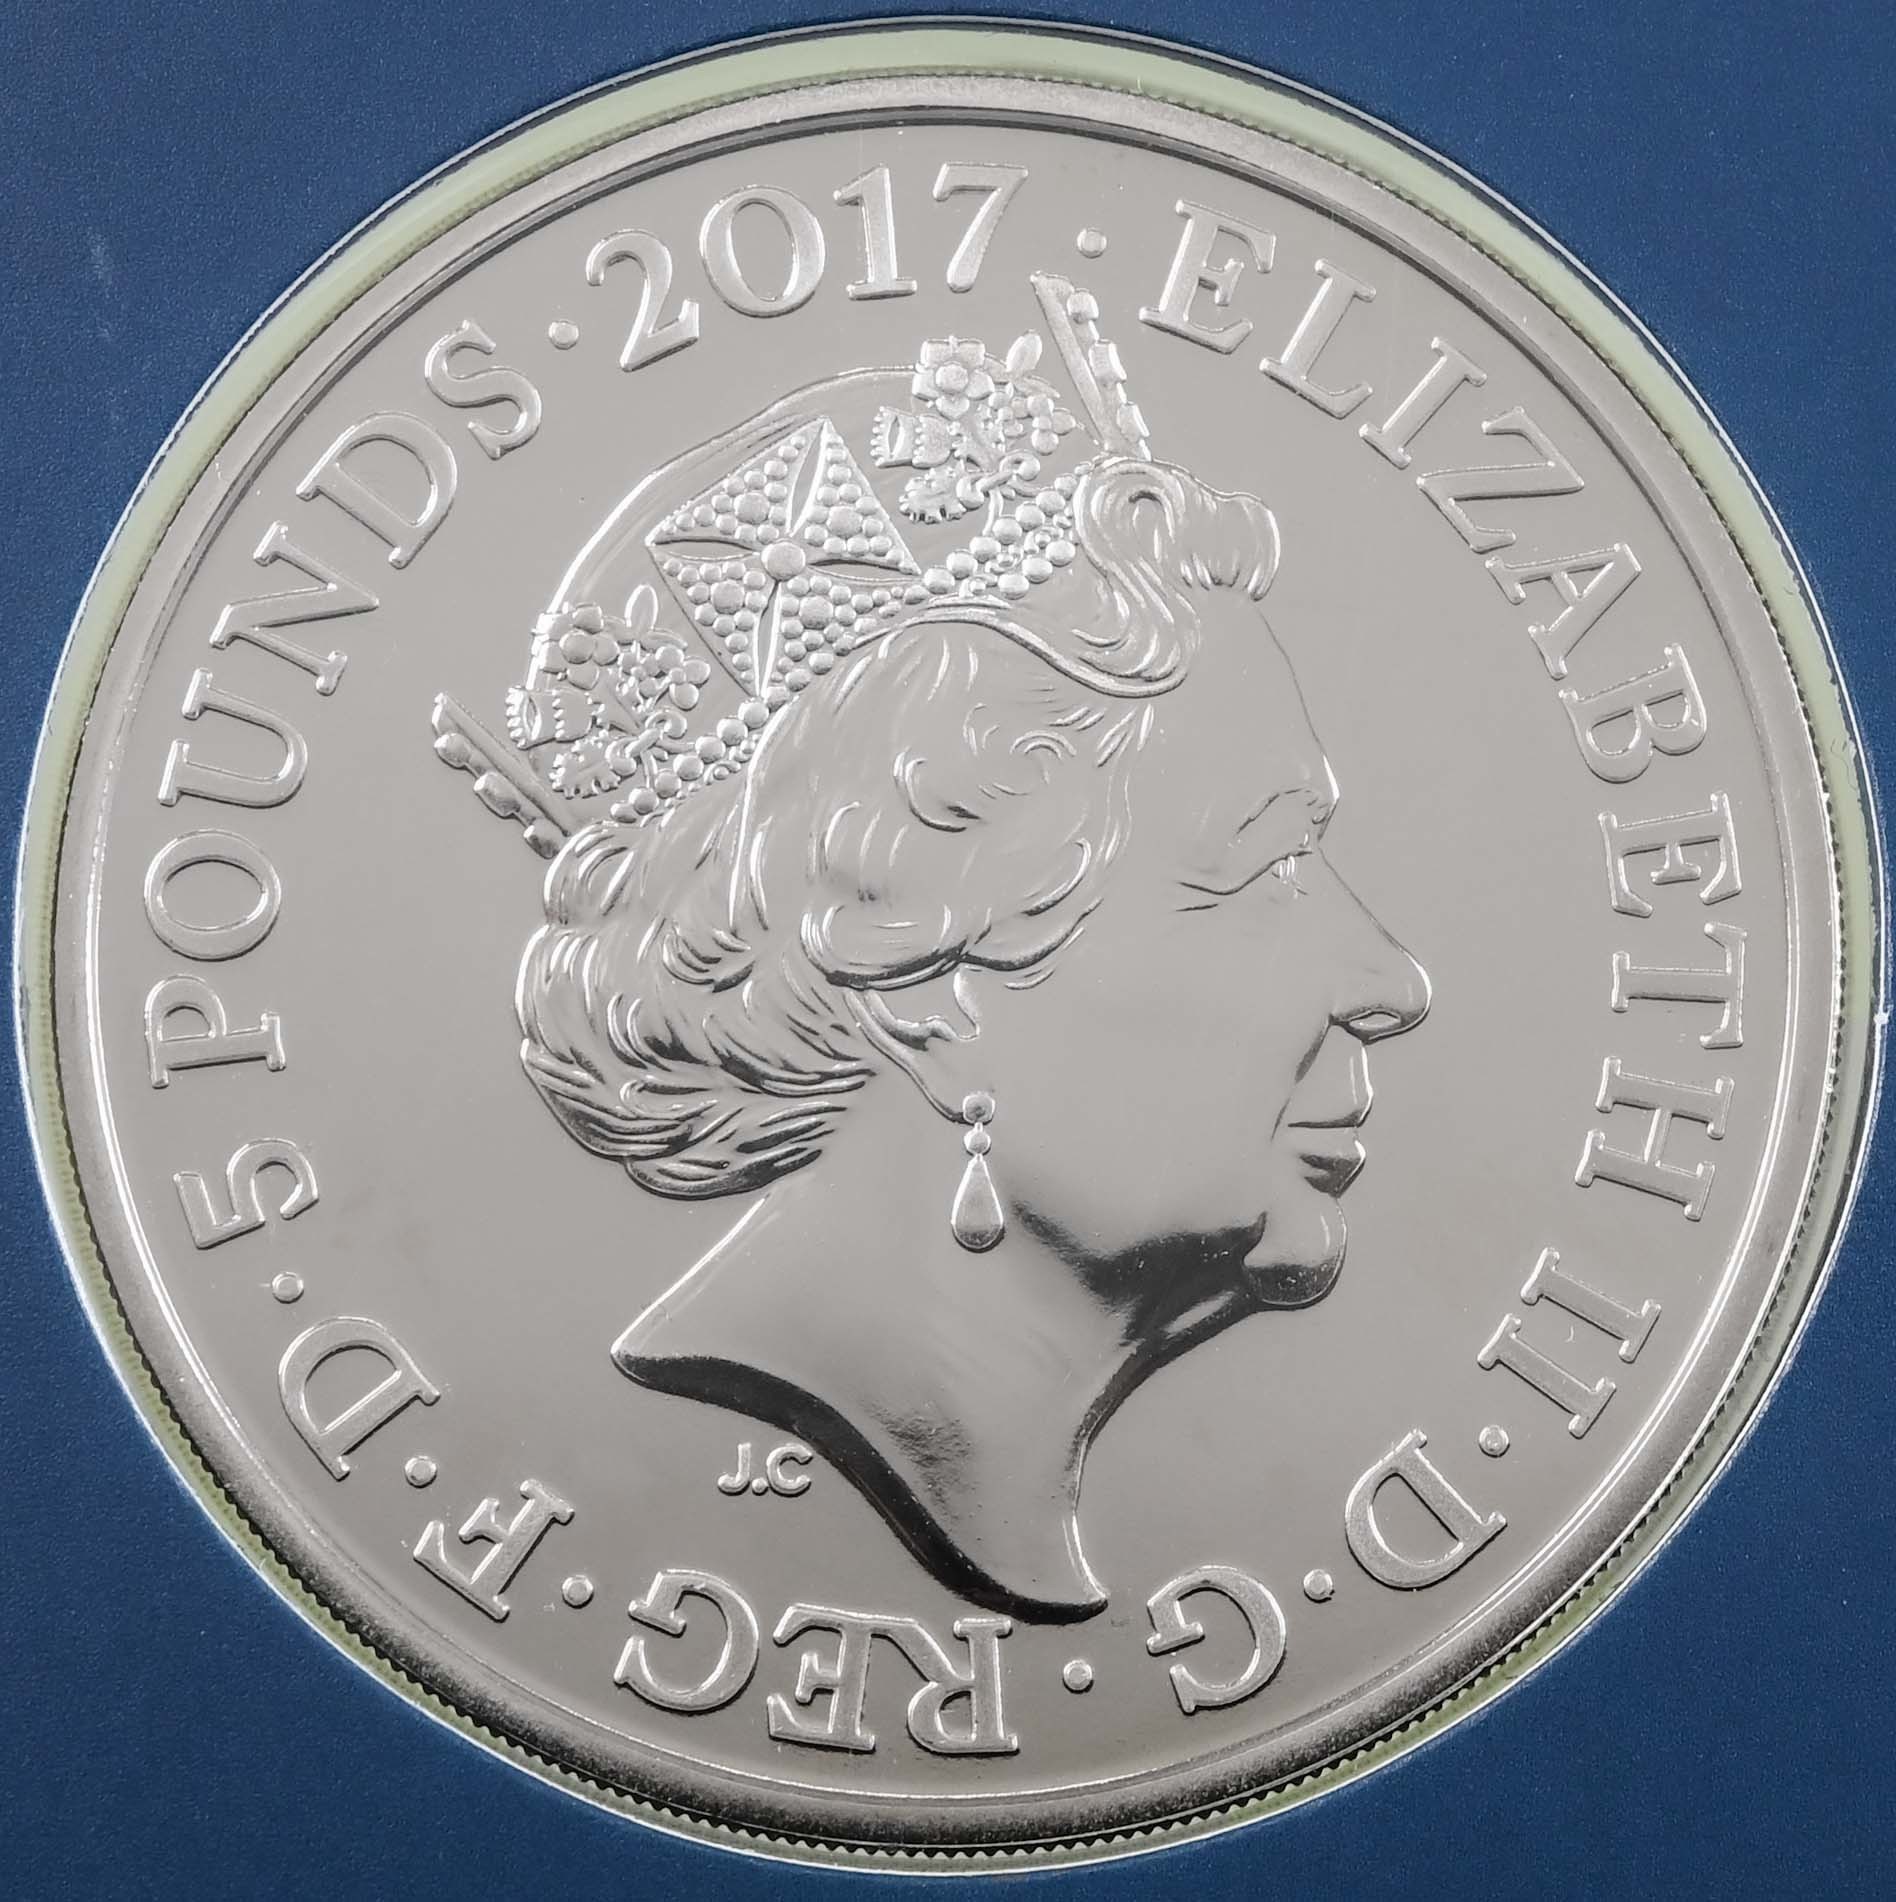 UK17PPBU 2017 Prince Philip Duke Of Edinburgh Life Of Service Five Pound Crown Brilliant Uncirculated Coin In Folder Obverse